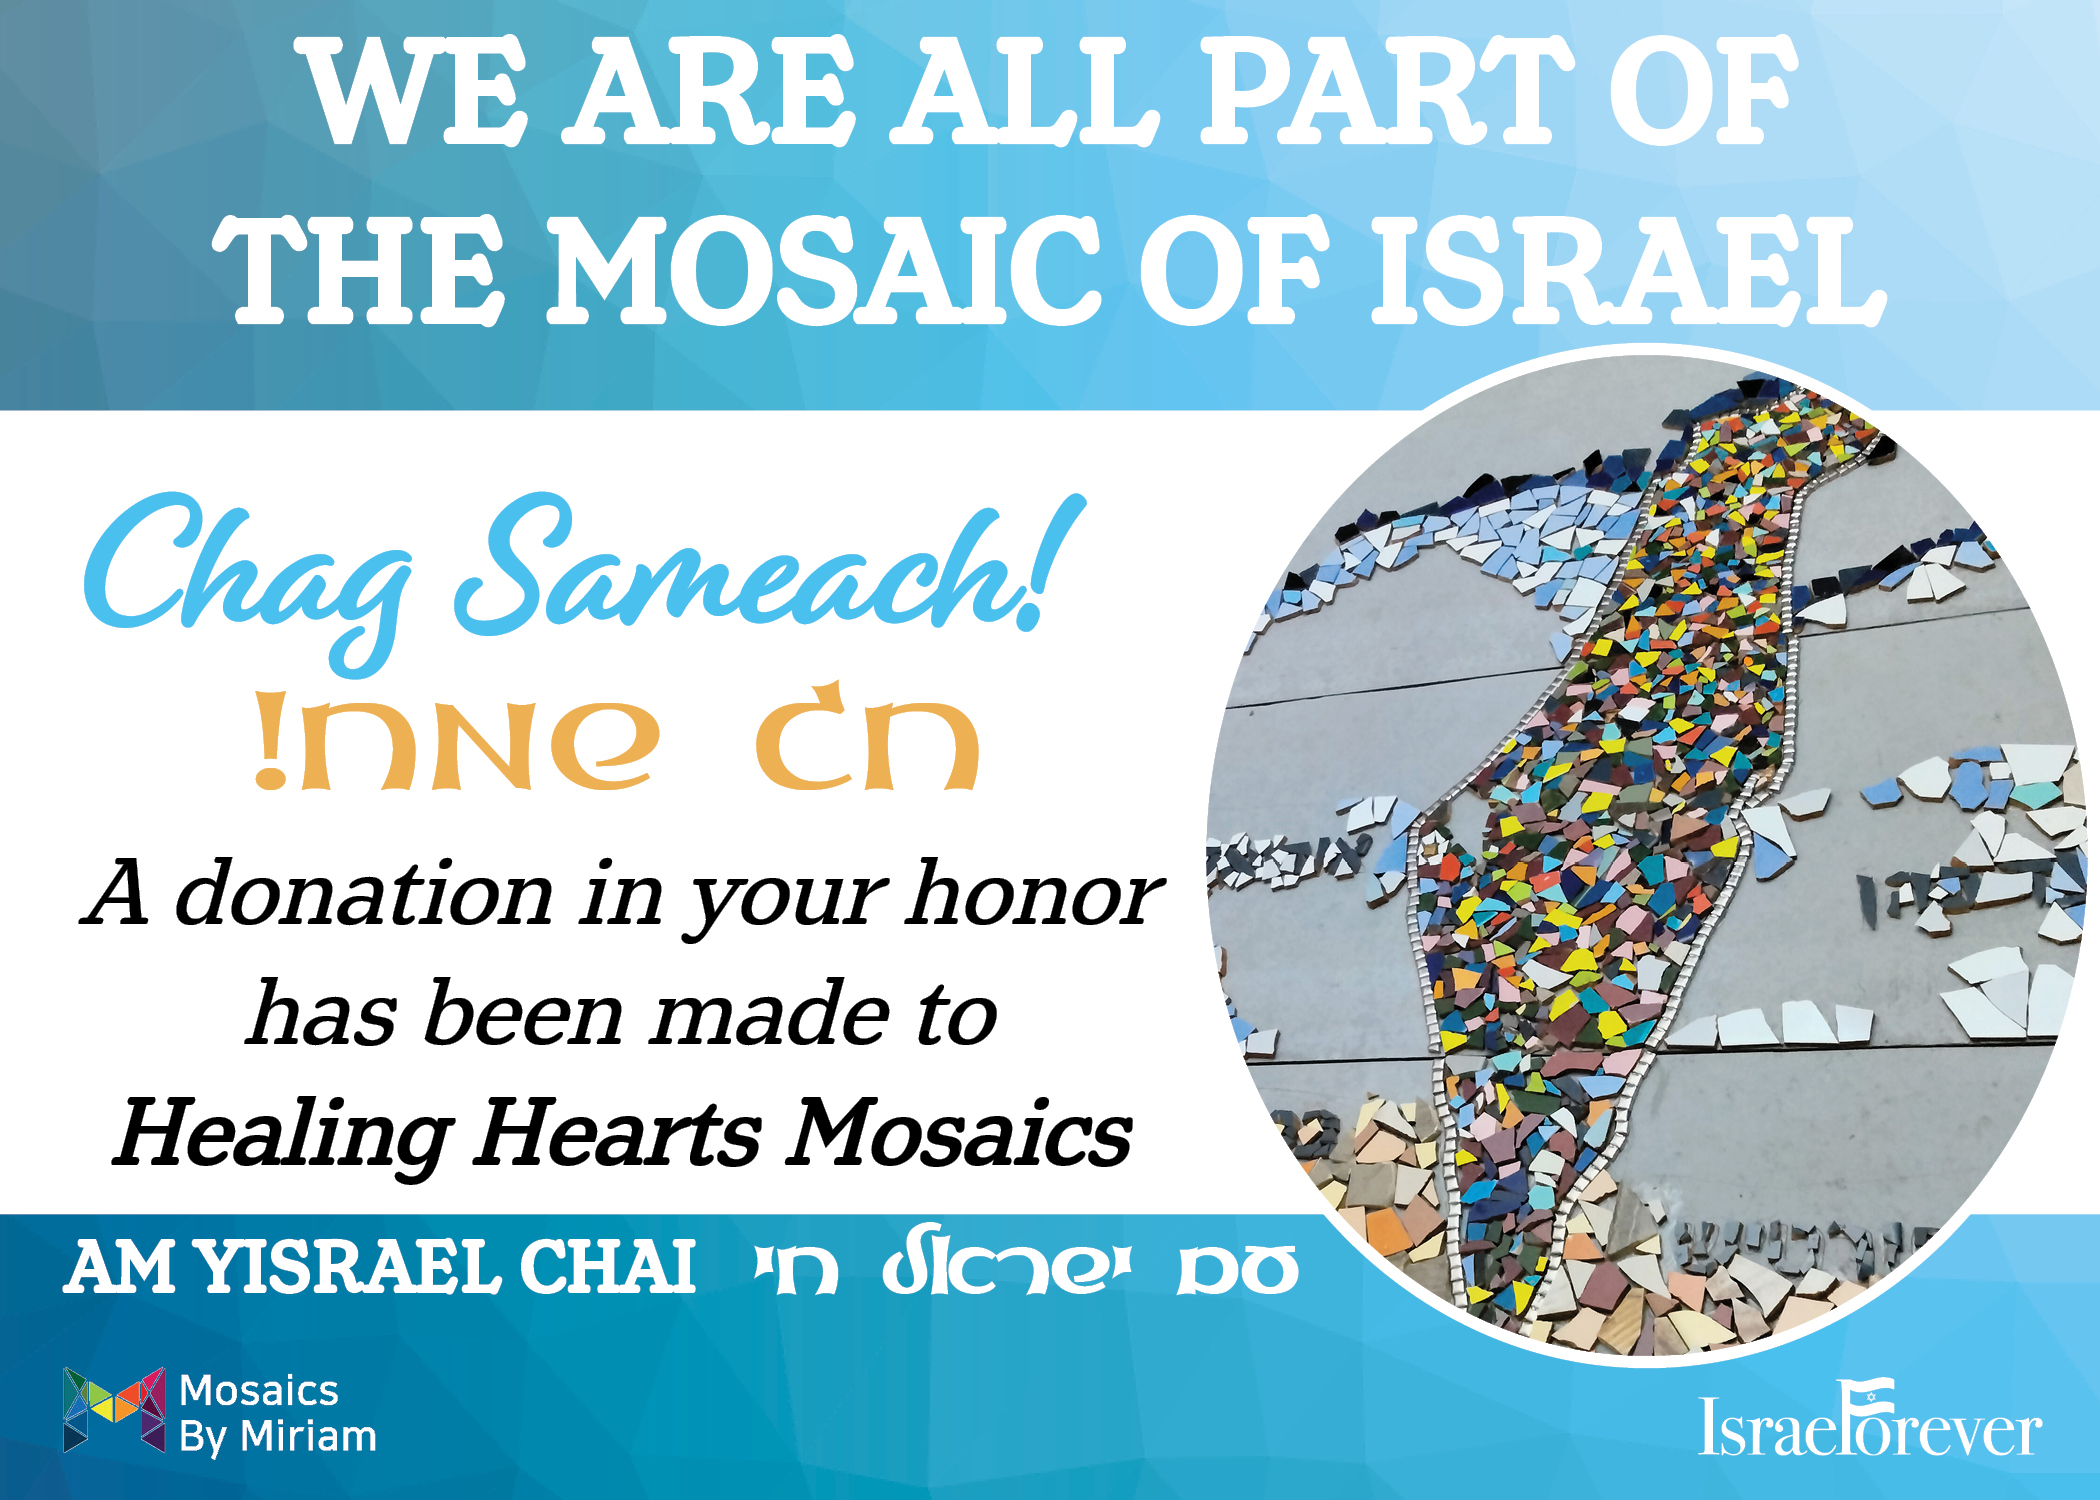 Mosaics Ecard 2: We Are the Mosaic of Israel